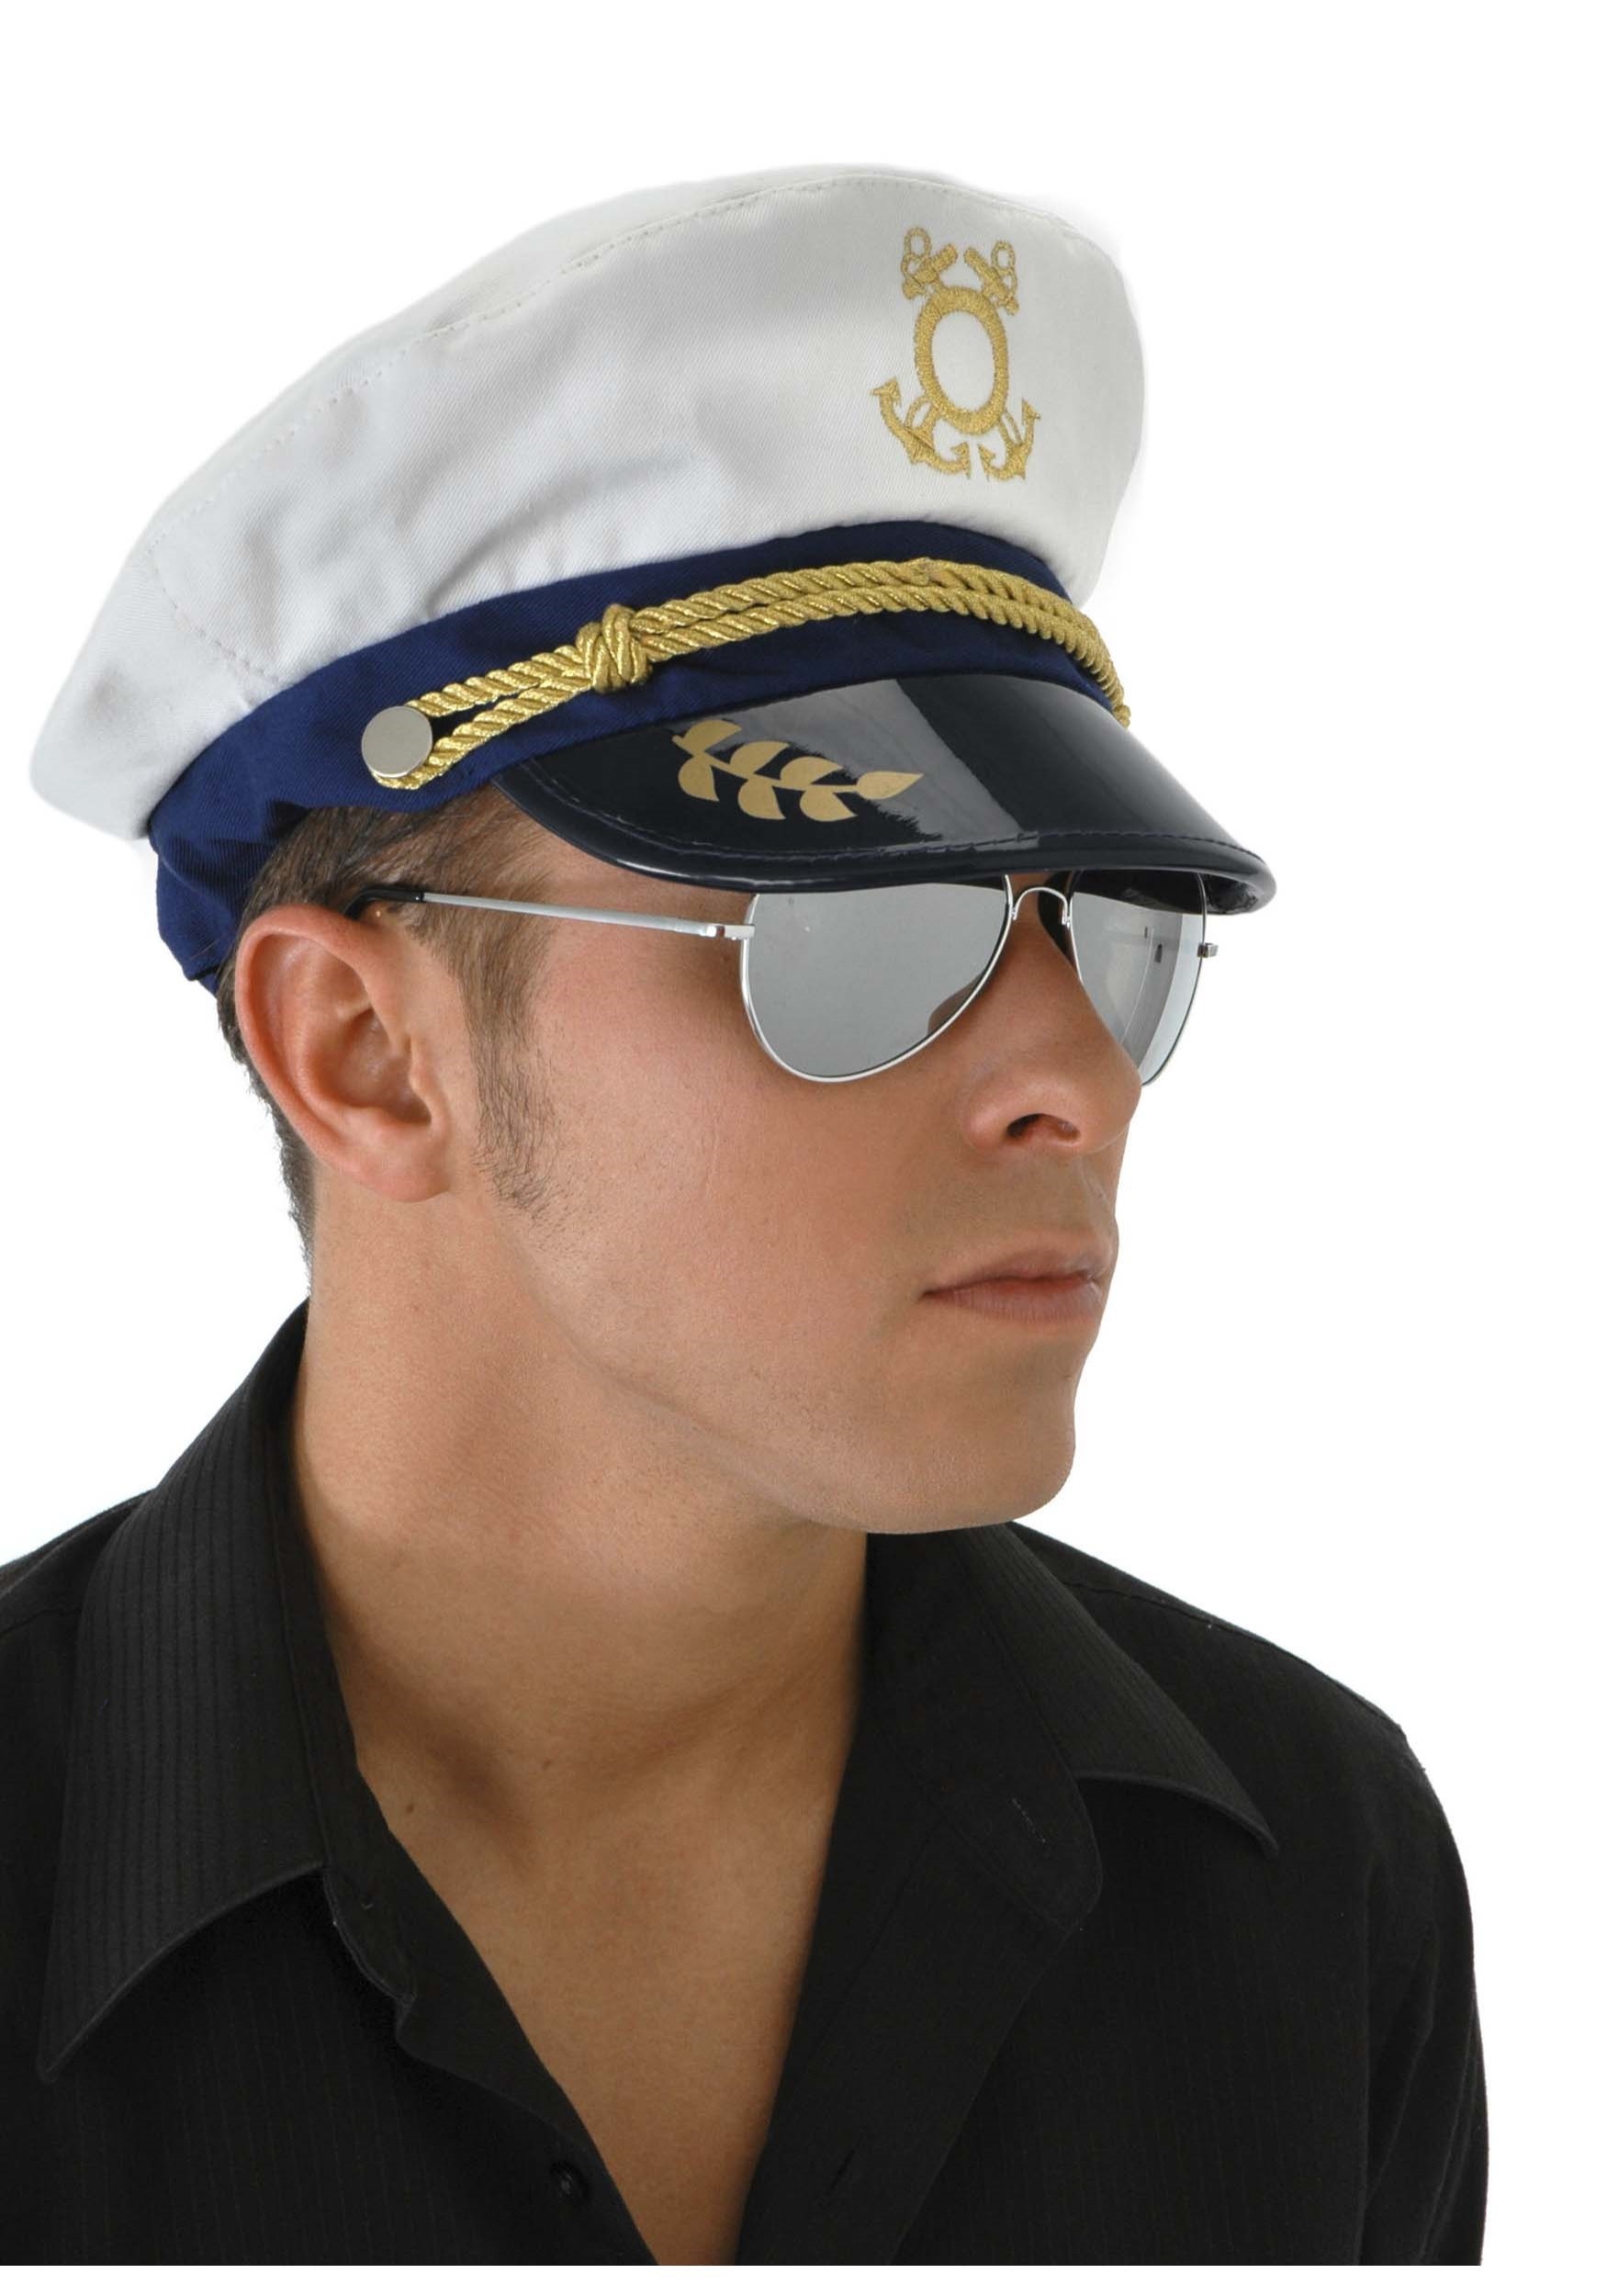 Sea Captain Costume Hat for Men